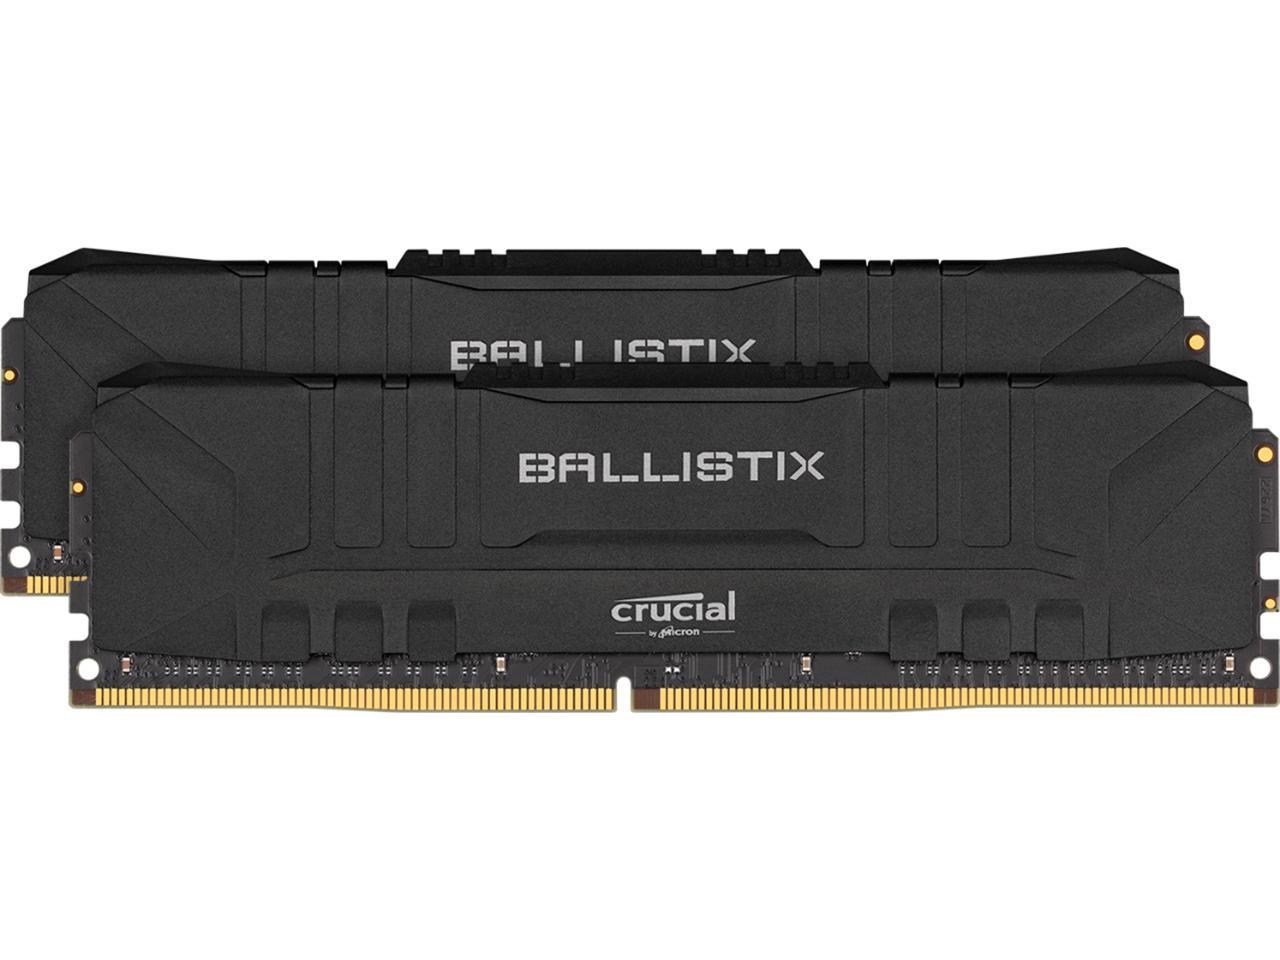 Crucial Ballistix 3200 MHz DDR4 DRAM Desktop Gaming Memory Kit 32GB  (16GBx2) CL16 BL2K16G32C16U4B (BLACK)